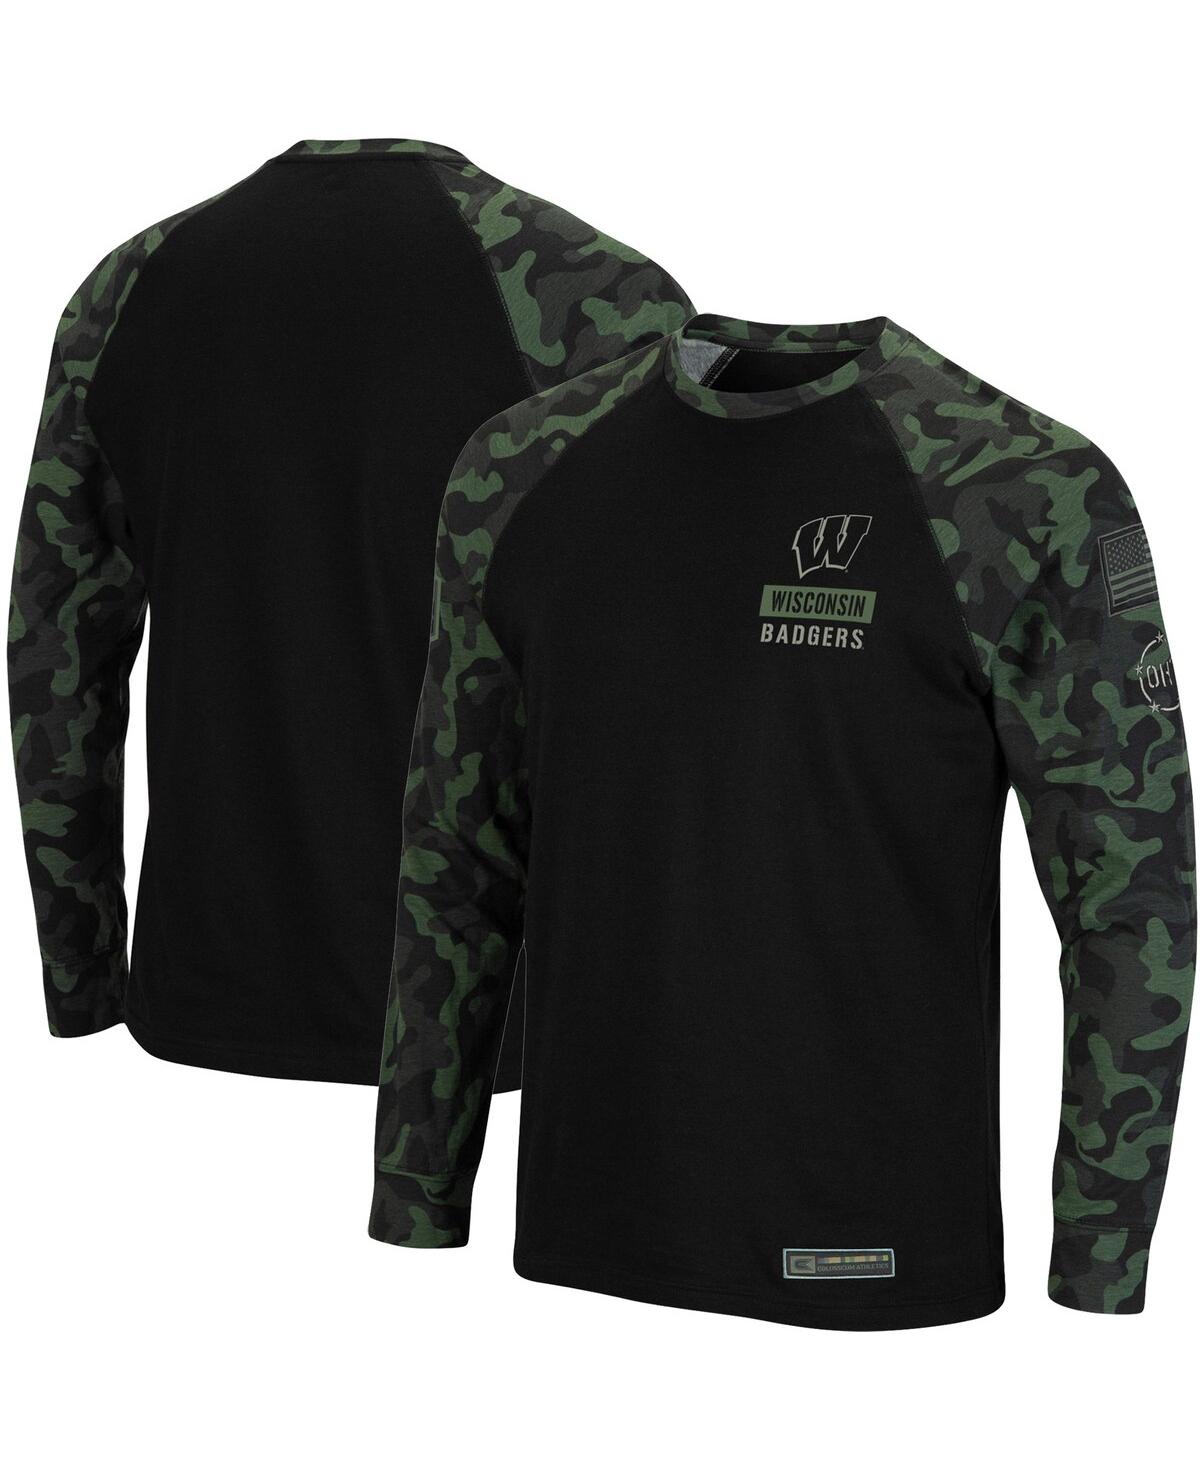 Men's Black Wisconsin Badgers Oht Military-Inspired Appreciation Camo Raglan Long Sleeve T-shirt - Black